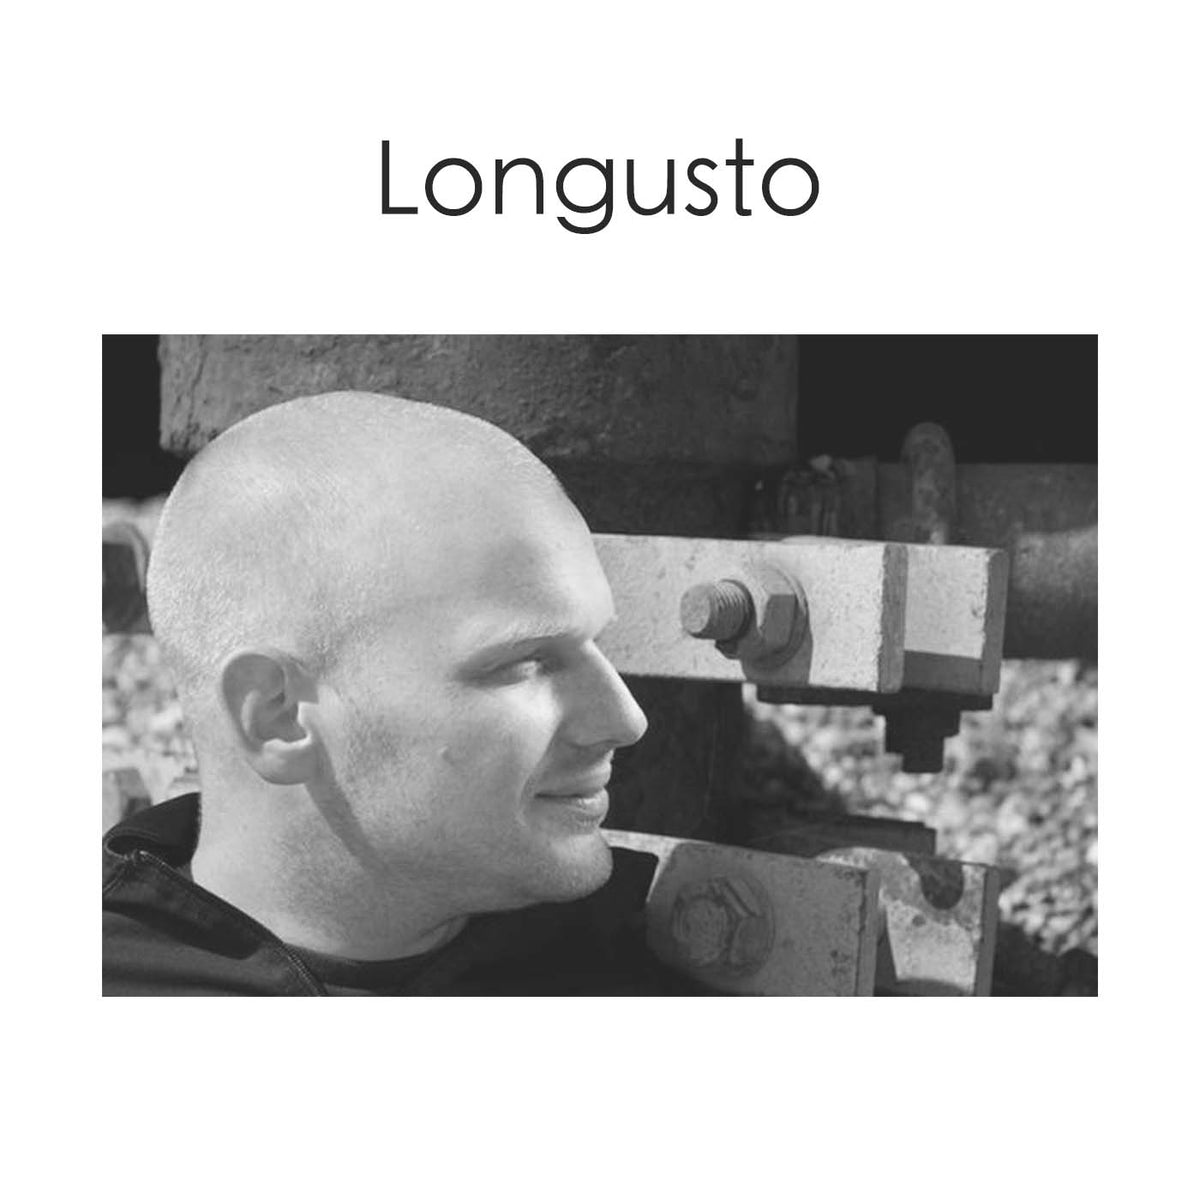 Stumbling, Tom Caruana presents Longusto & Devise